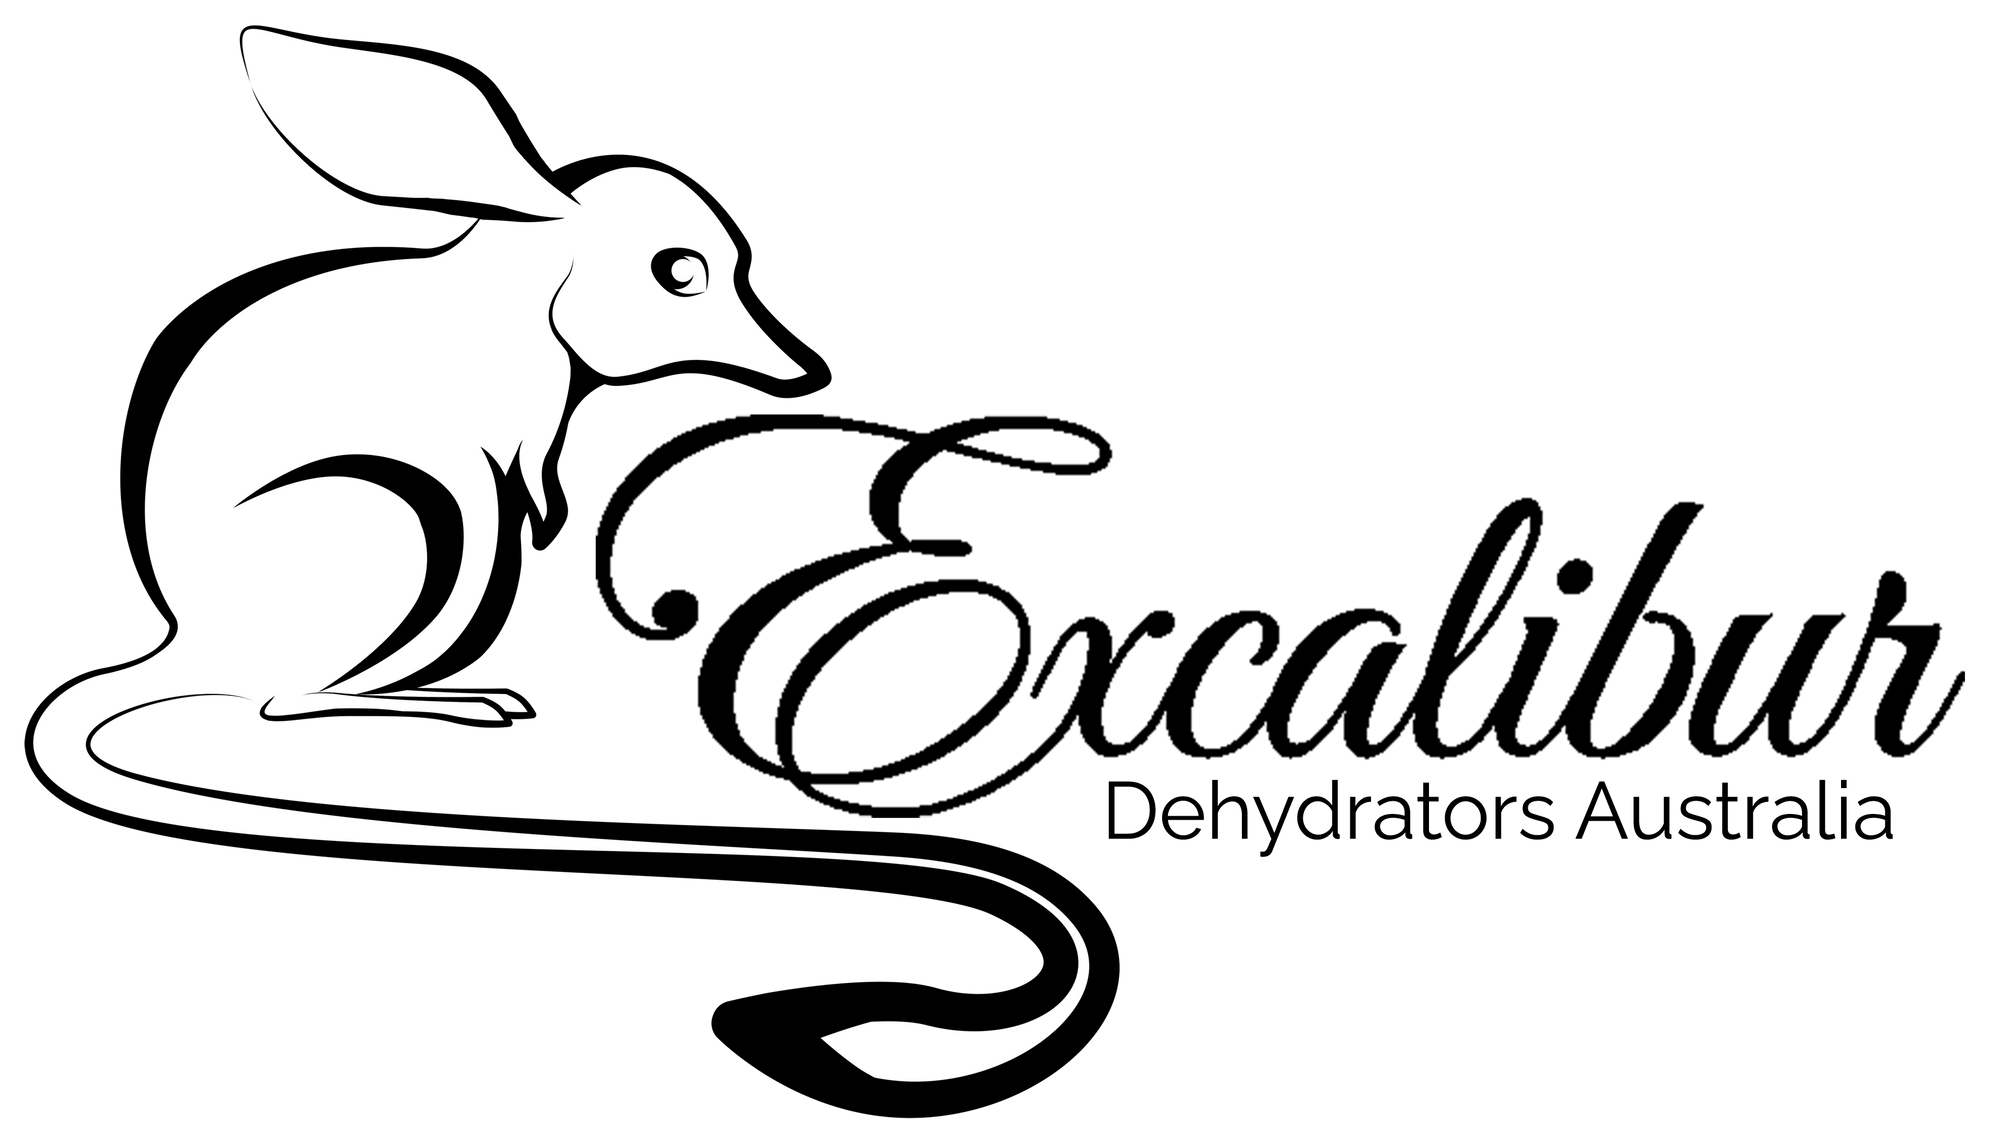 Excalibur Dehydrators Australia Logo